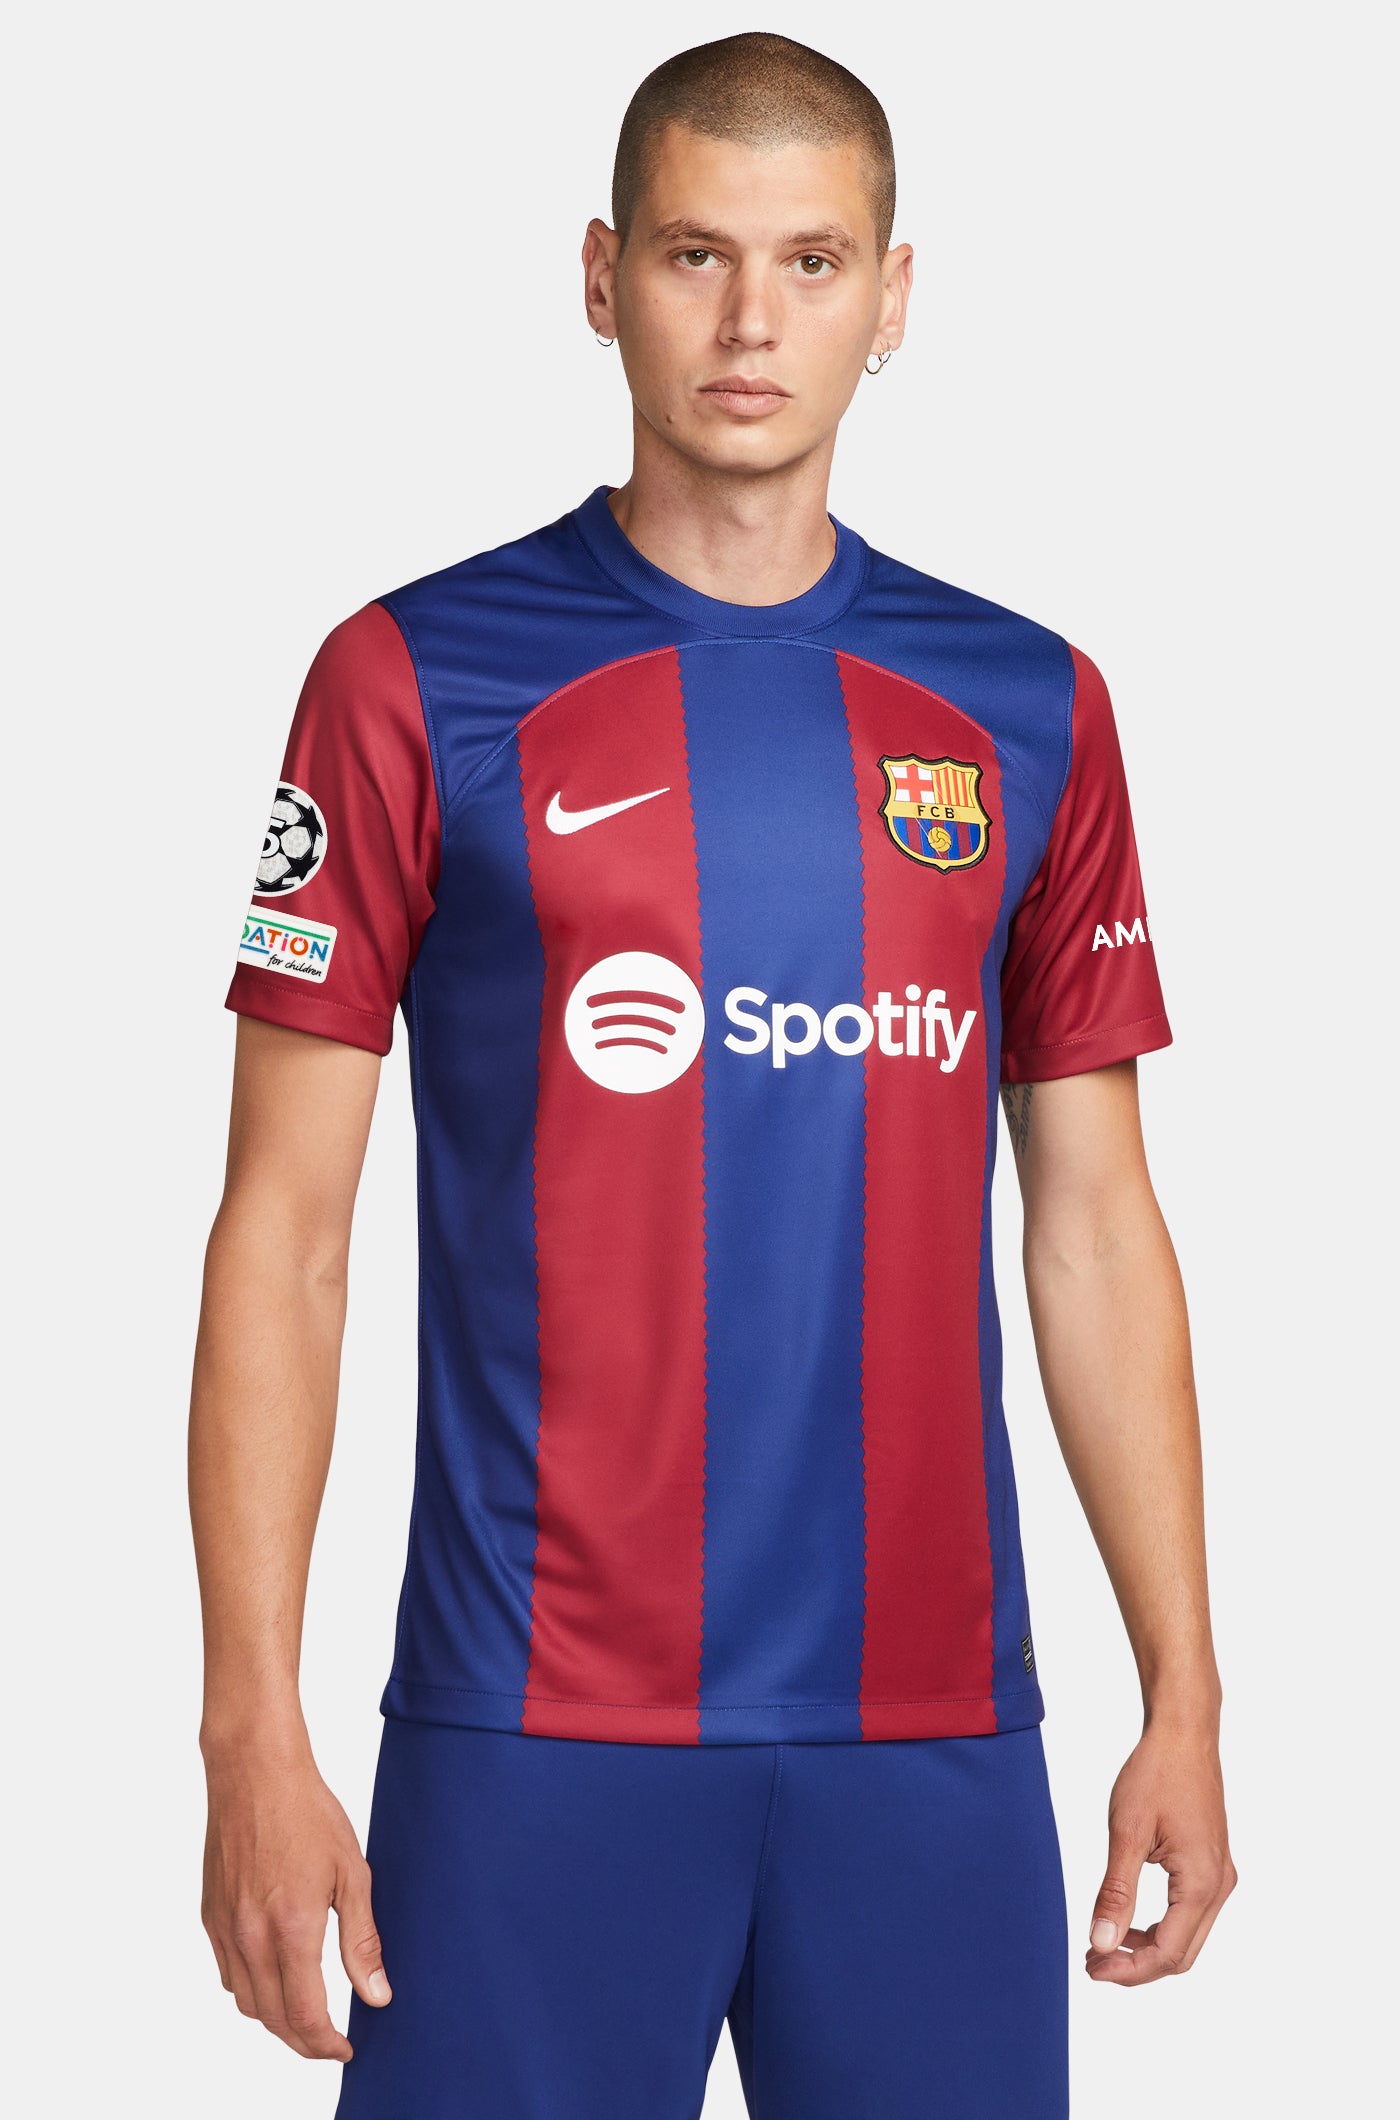 UCL FC Barcelona home shirt 23/24 - BALDE